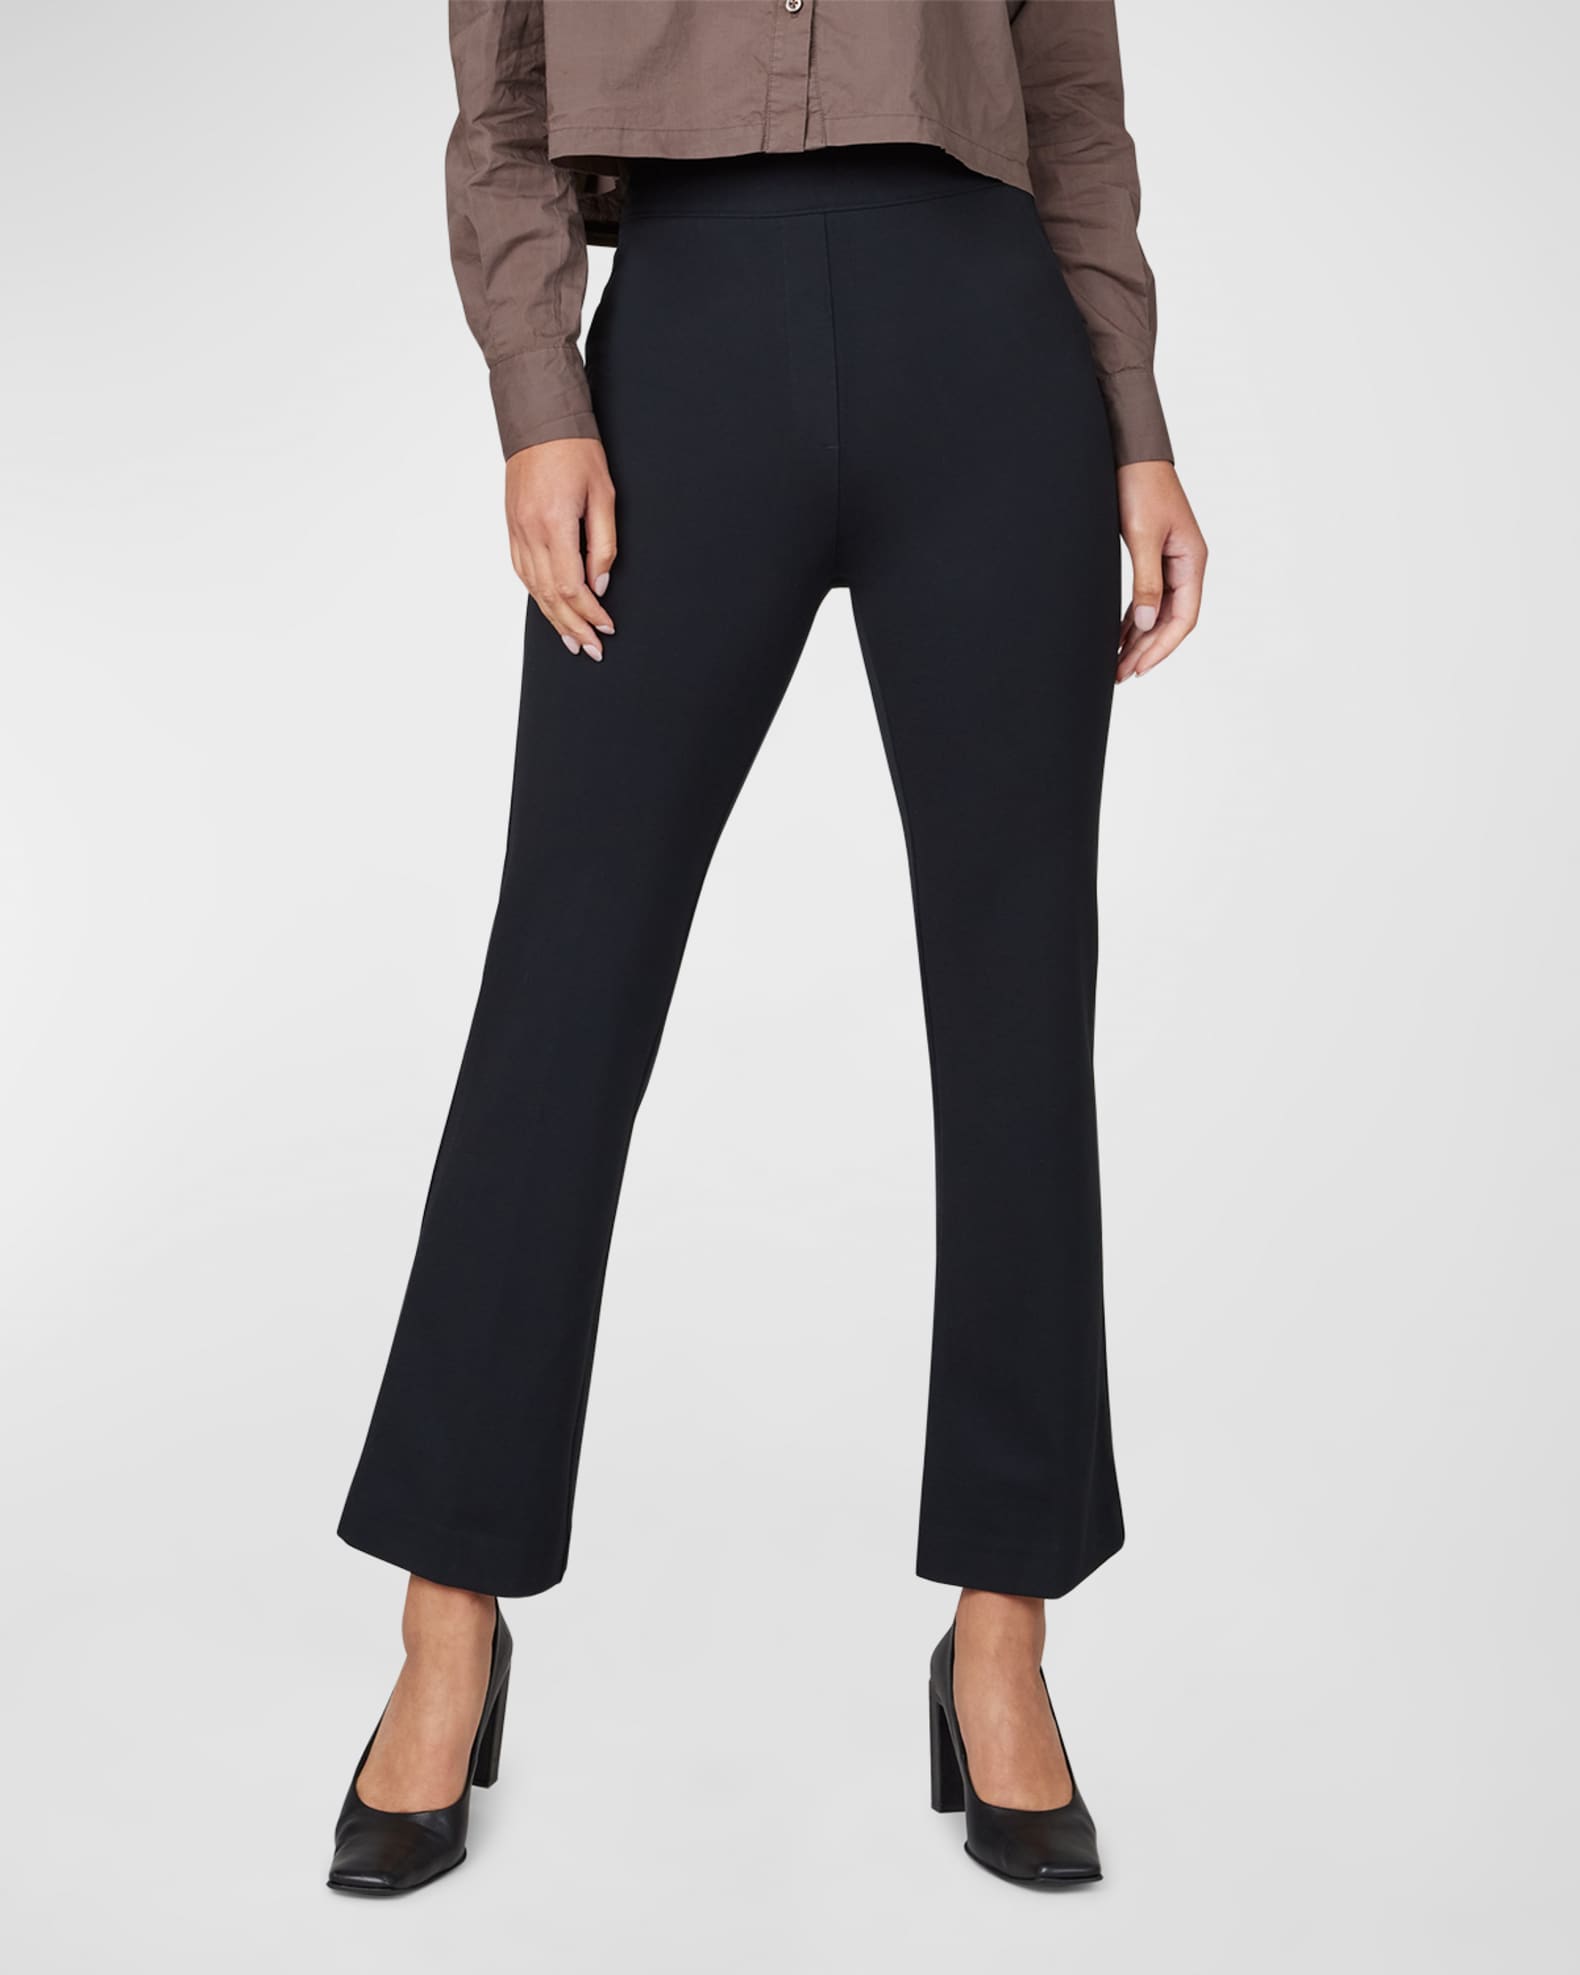 Black Split Flare Pants For Women Simple Style Long Straight